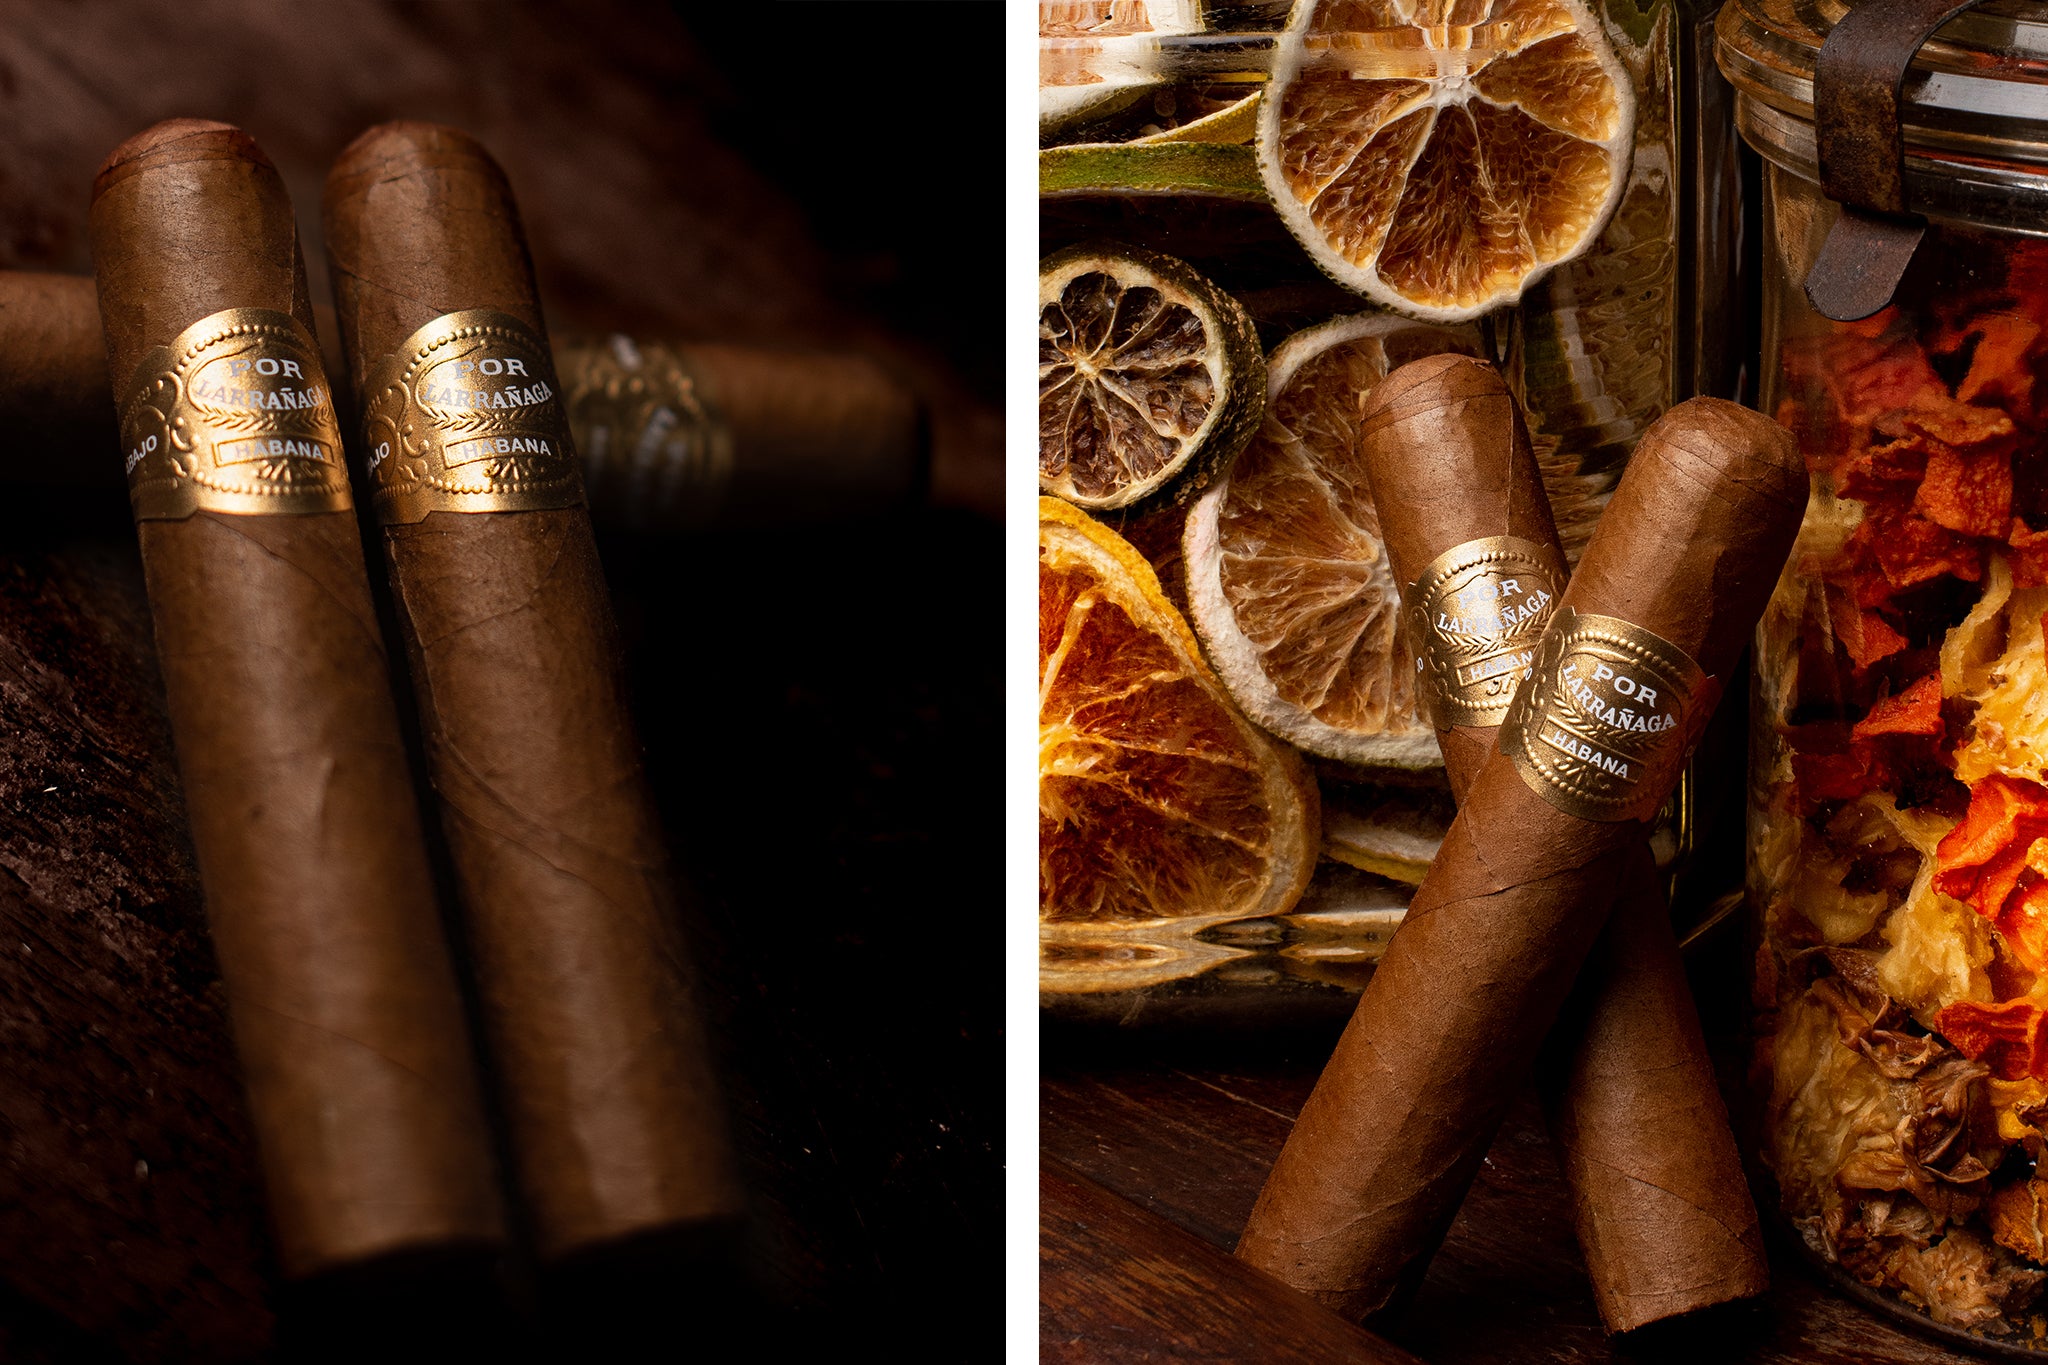 The gold standard, Por Larrañaga cigars on EGM